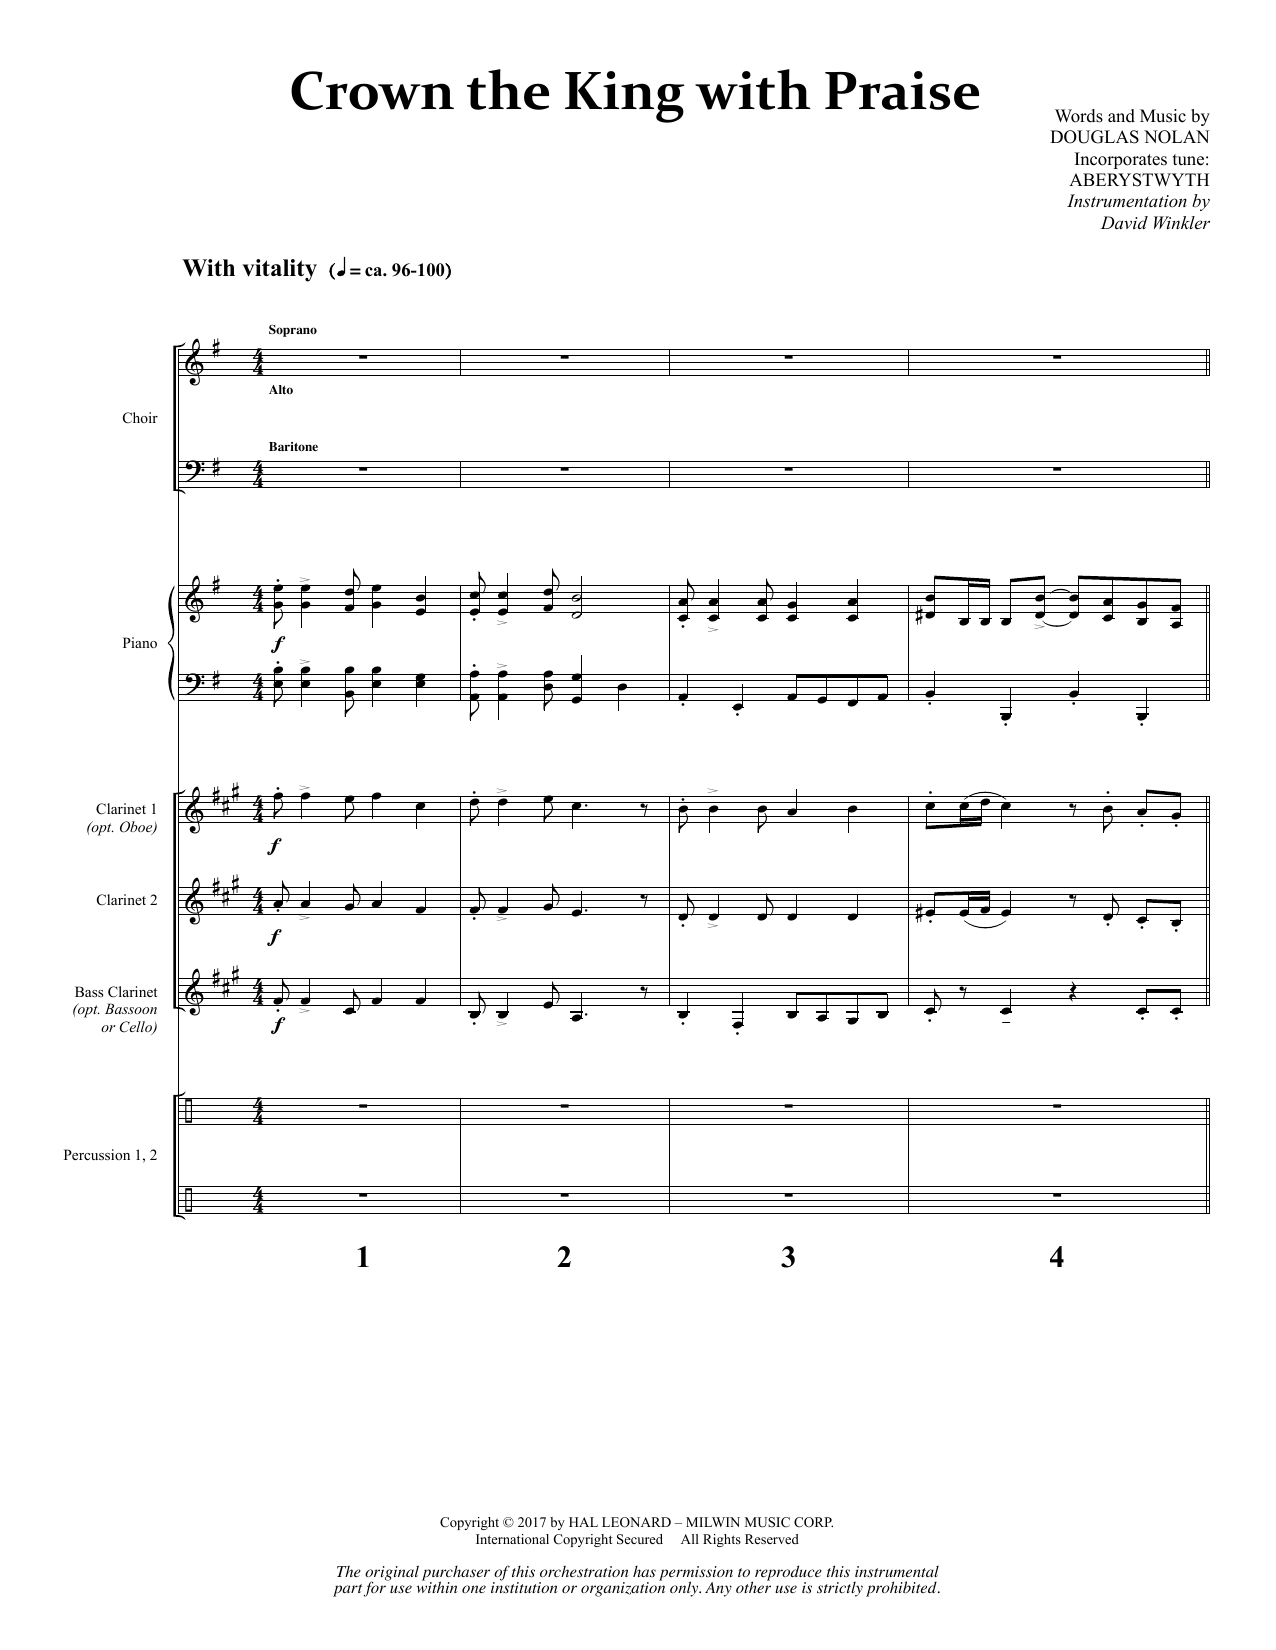 Douglas Nolan Crown the King with Praise - Full Score Sheet Music Notes & Chords for Choral Instrumental Pak - Download or Print PDF